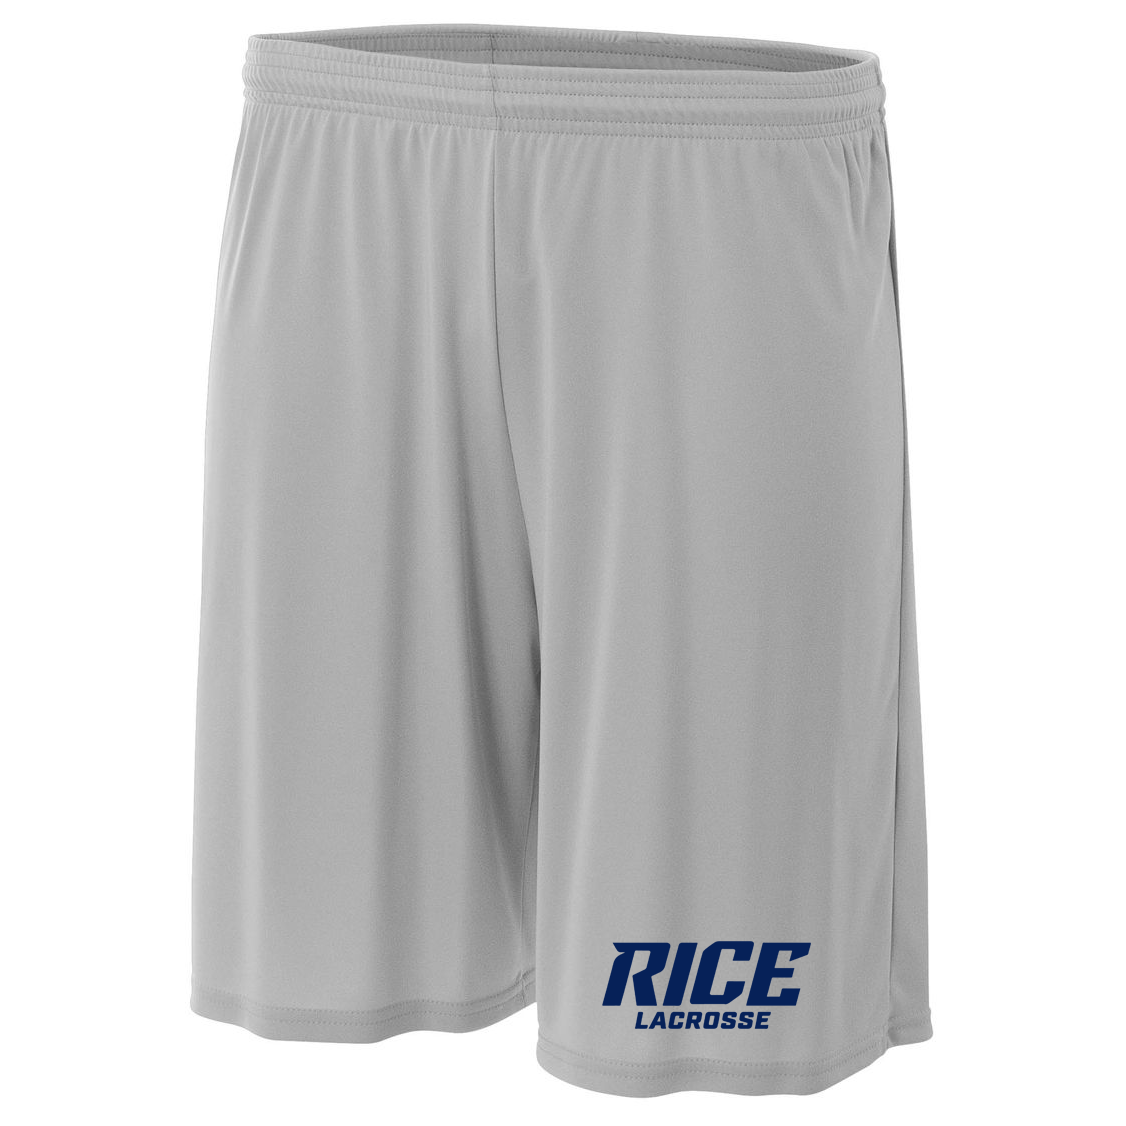 Rice University Lacrosse Cooling 7" Performance Shorts